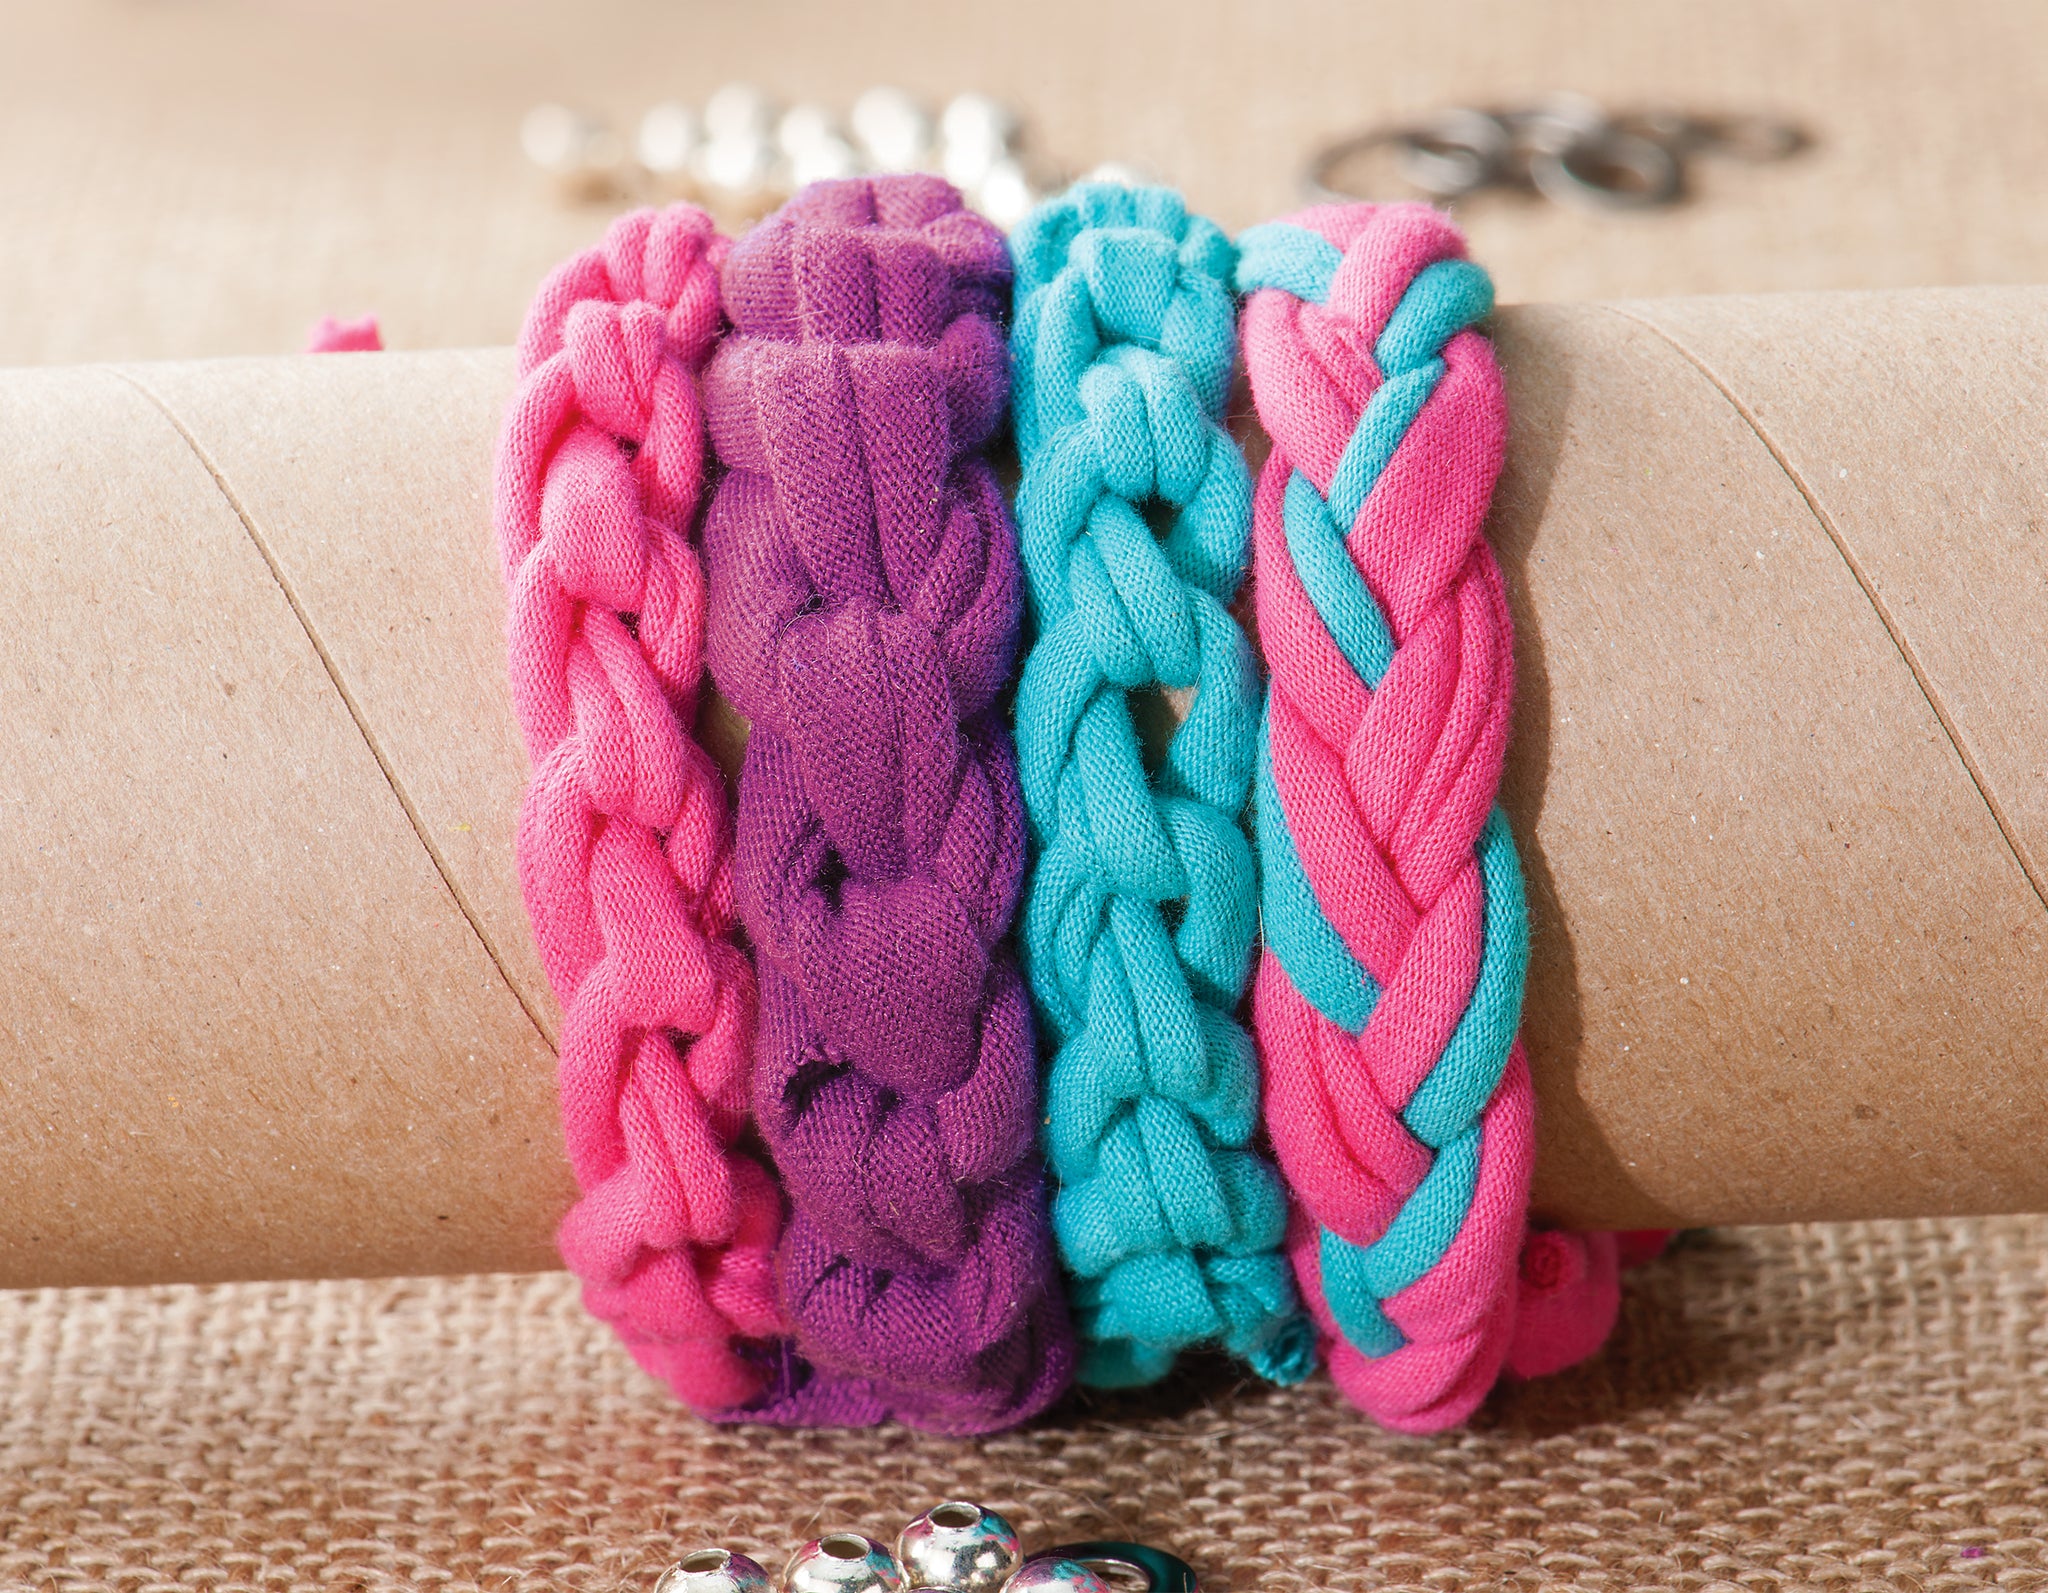 Craftabelle - Friendship Fabrics Creation Kit - Bracelet Making